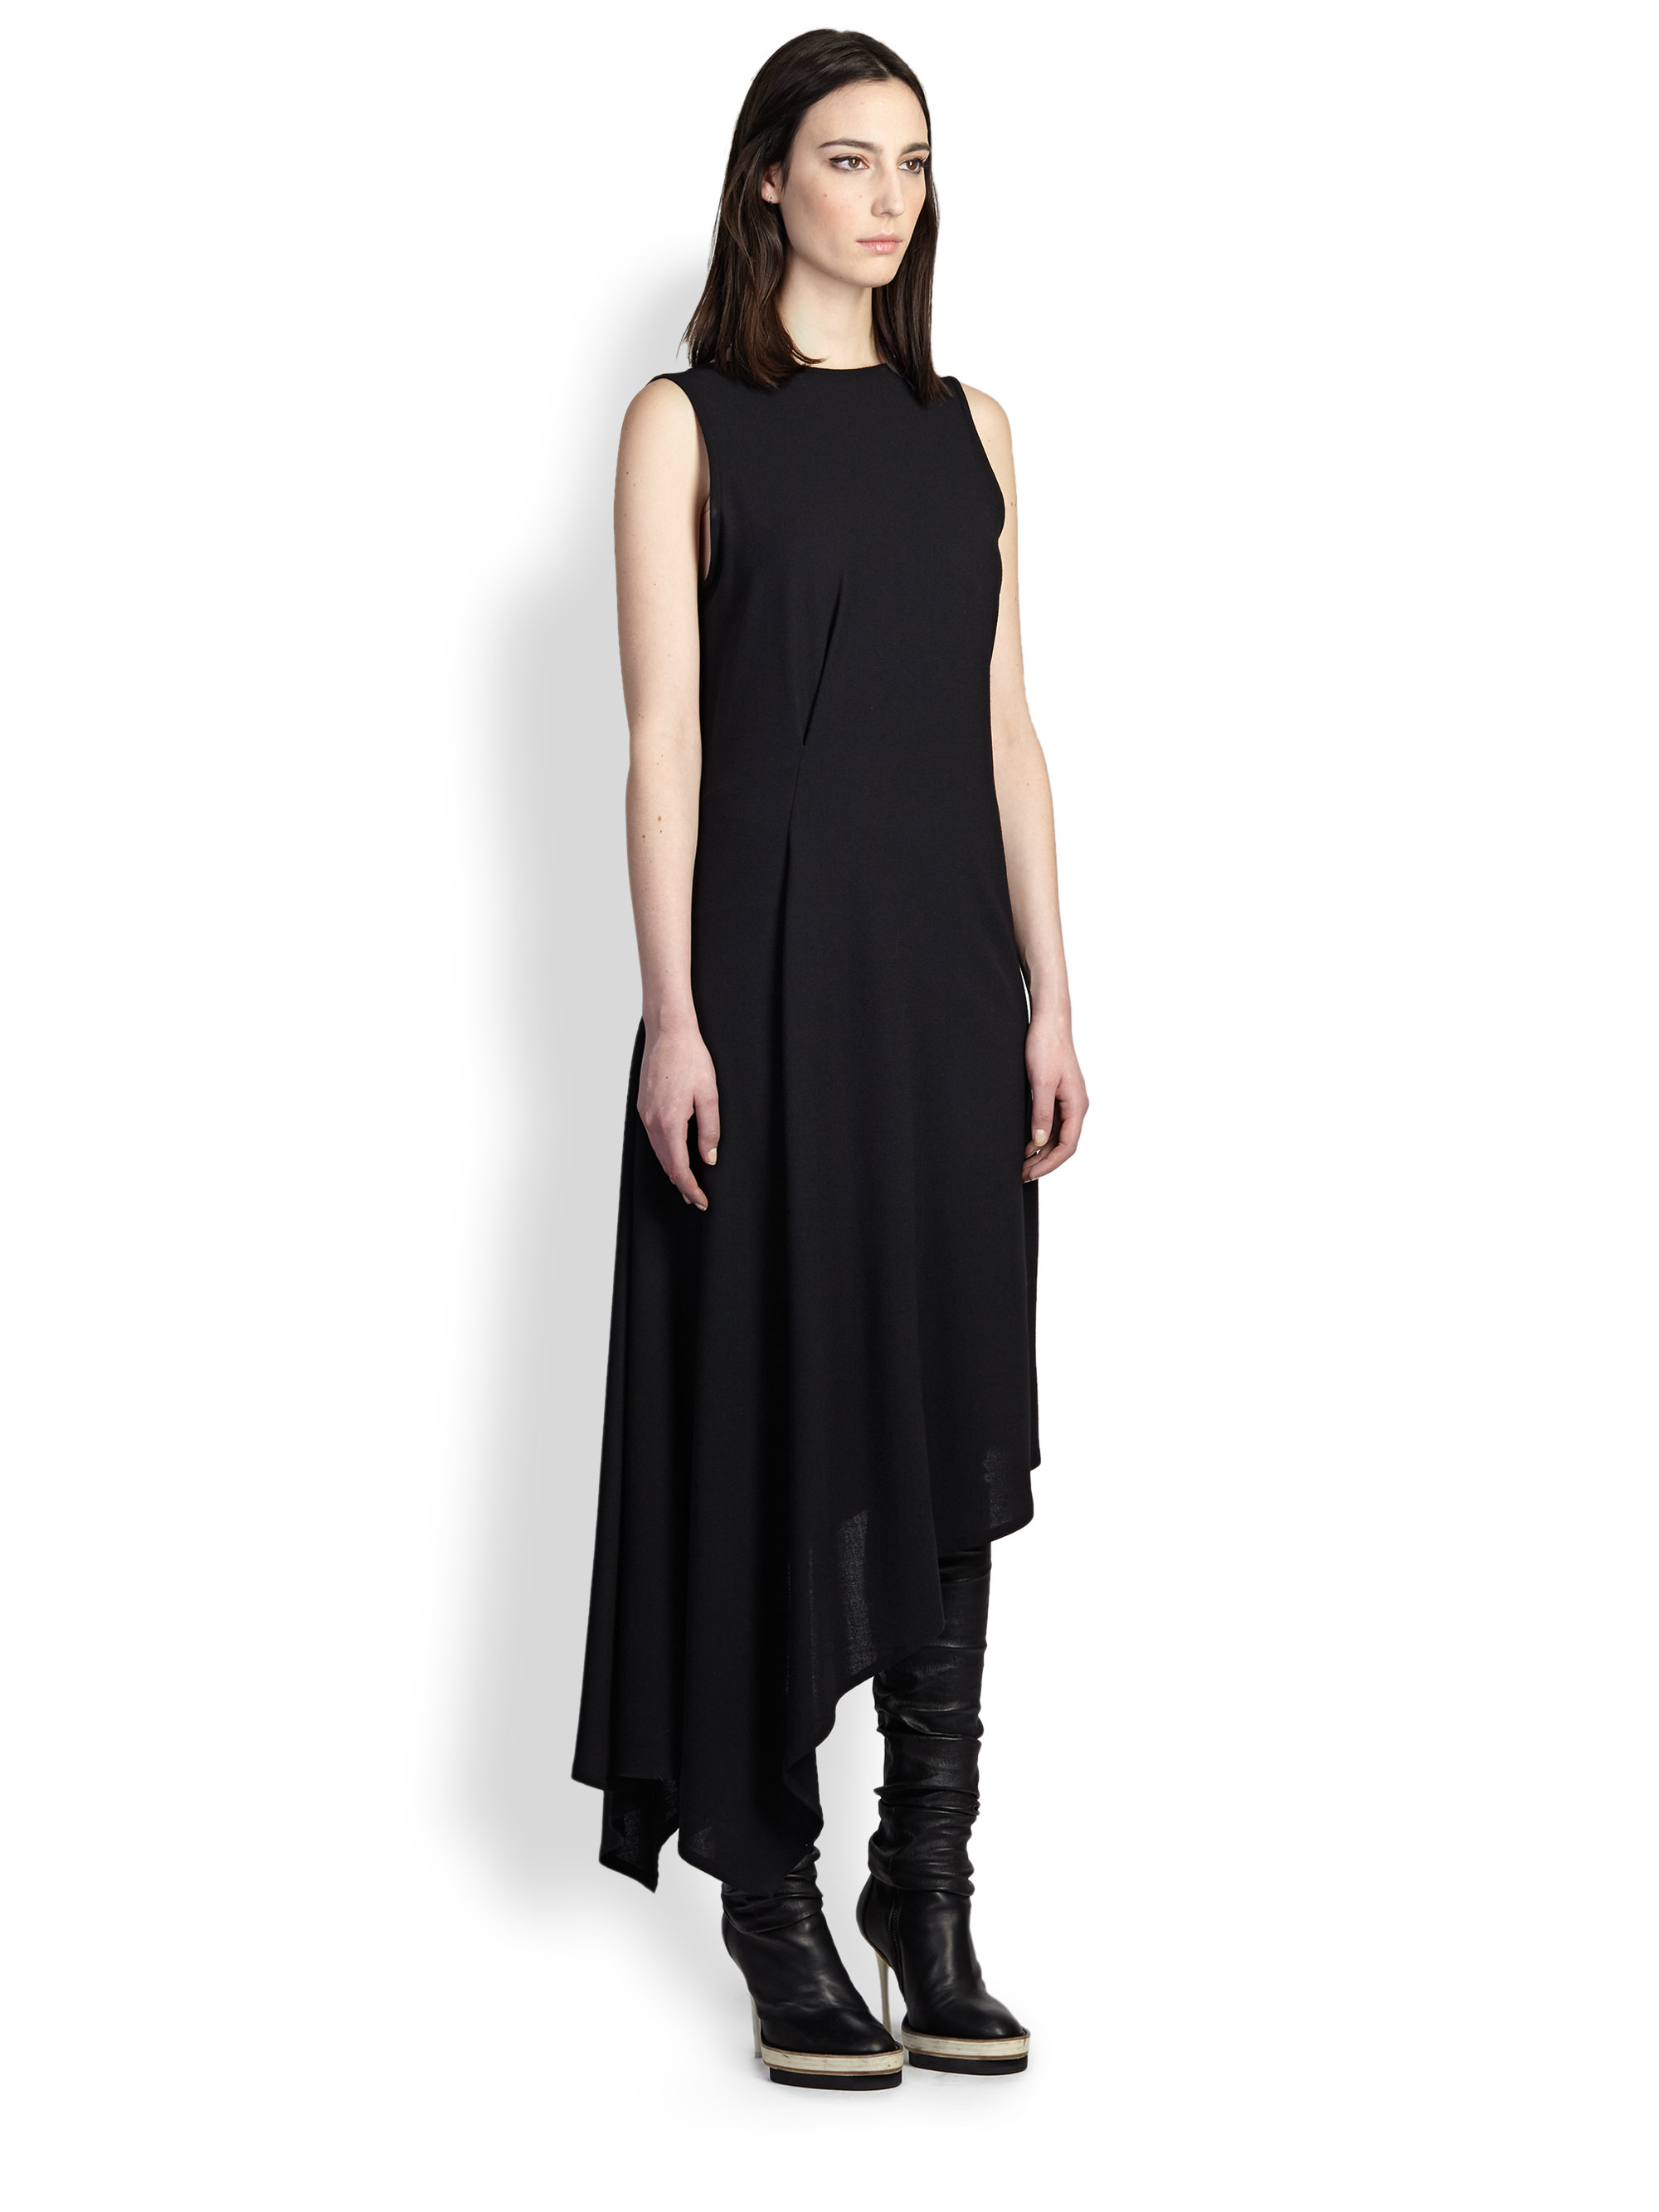 Lyst - Ann Demeulemeester Blackjack Asymmetrical Dress in Black